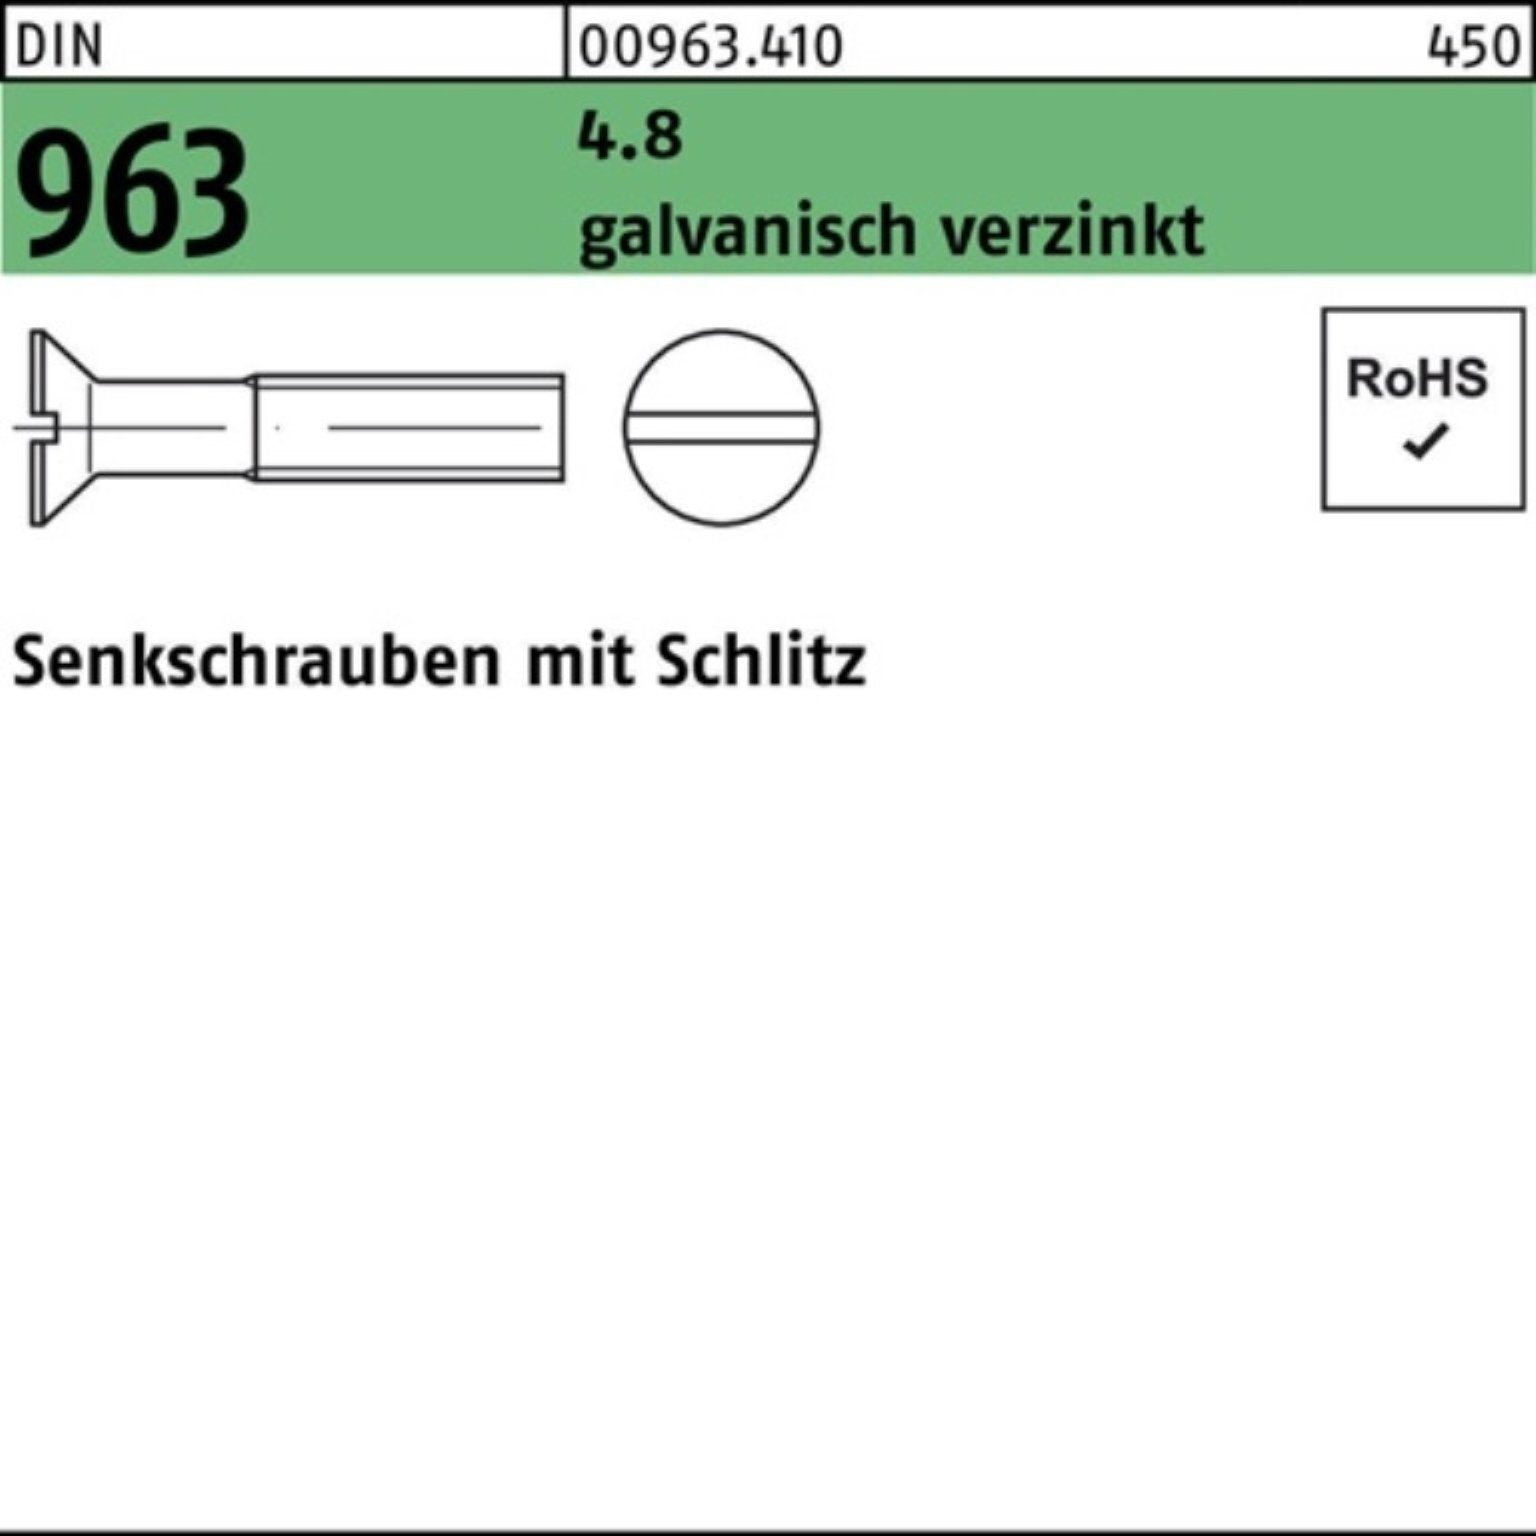 Reyher Senkschraube 100er Pack Senkschraube DIN 963 Schlitz M8x 12 4.8 galv.verz. 100 Stü